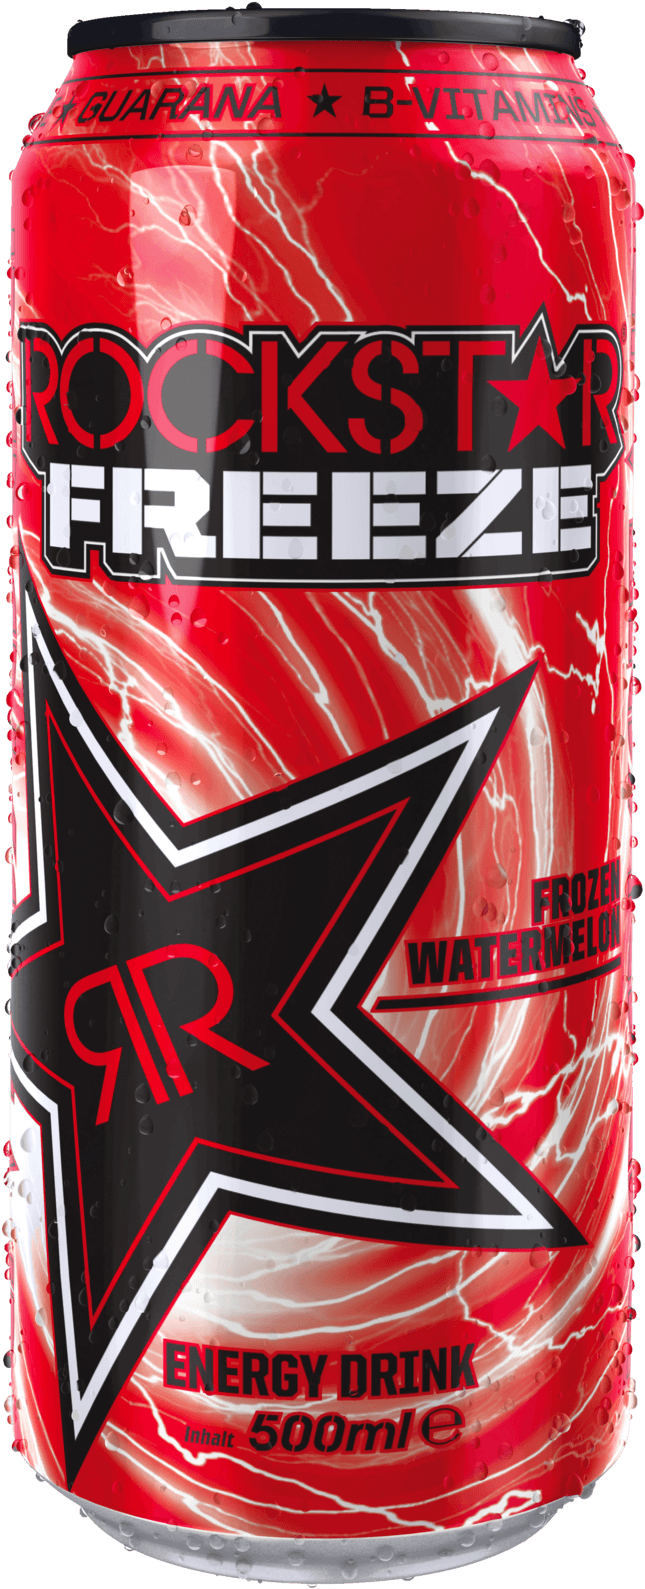 Rockstar Freeze Energy Drink Watermelon Can